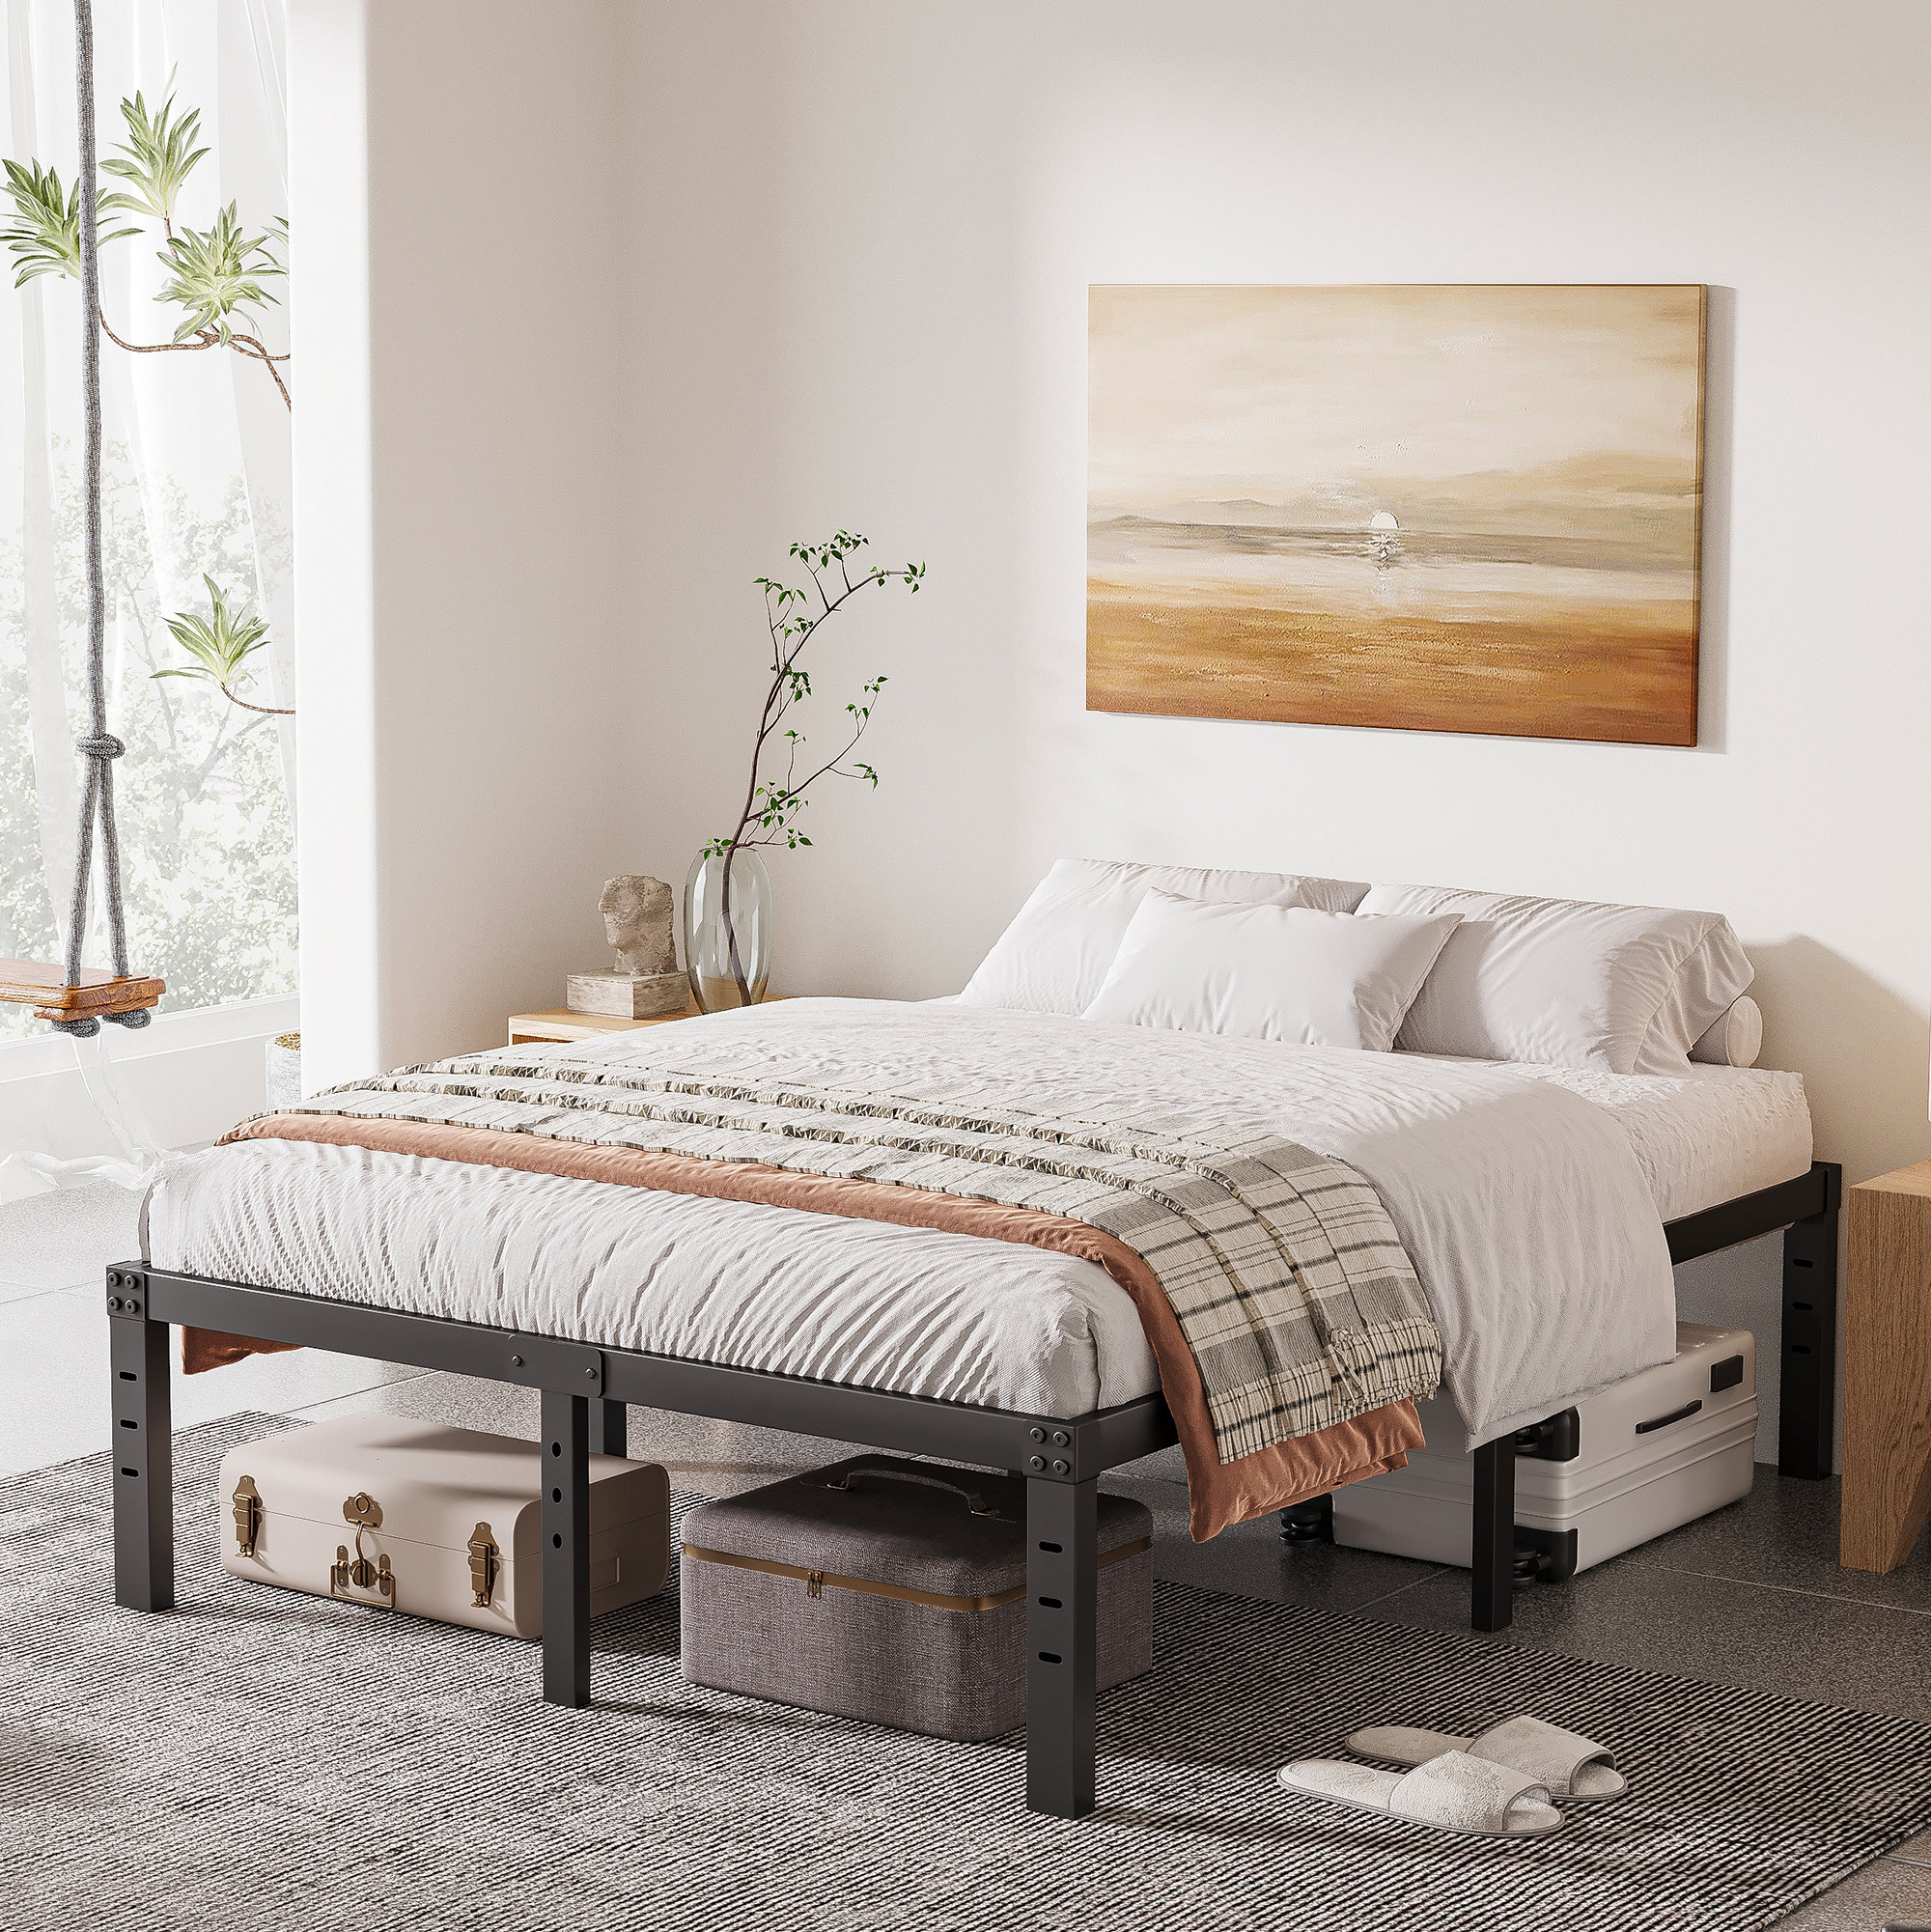 Marple 16 inch Metal Platform Bed Frame with Wood Slat Support, Heavy Duty Mattress Foundation, Noise Free Alwyn Home Size: California King